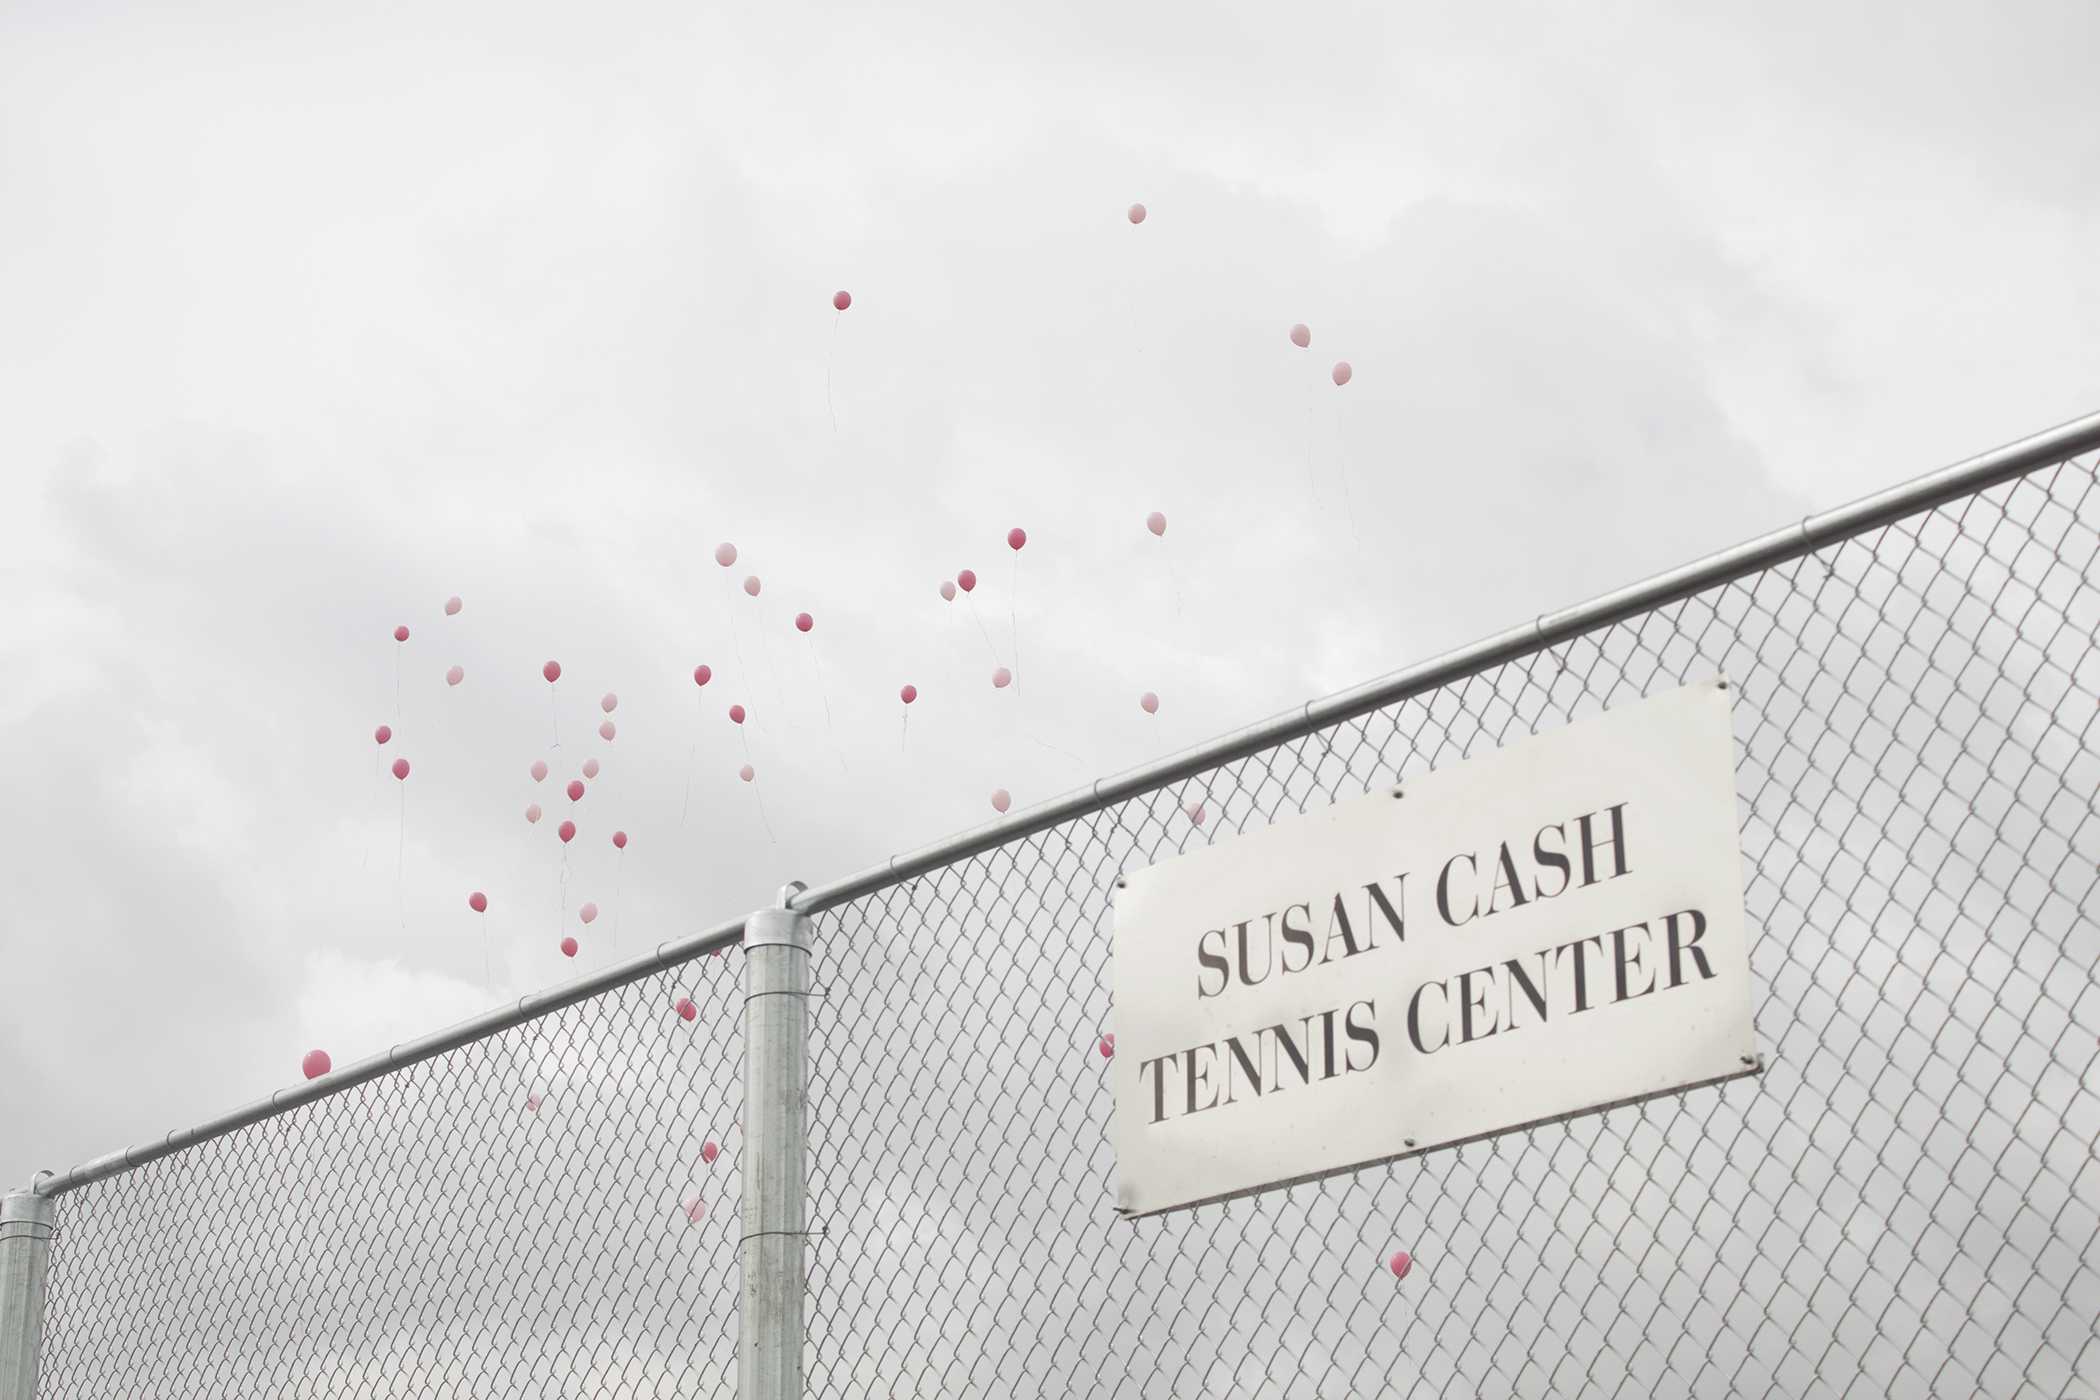 PHOTOS%3A+Susan+Cash+Tennis+Center+Dedication